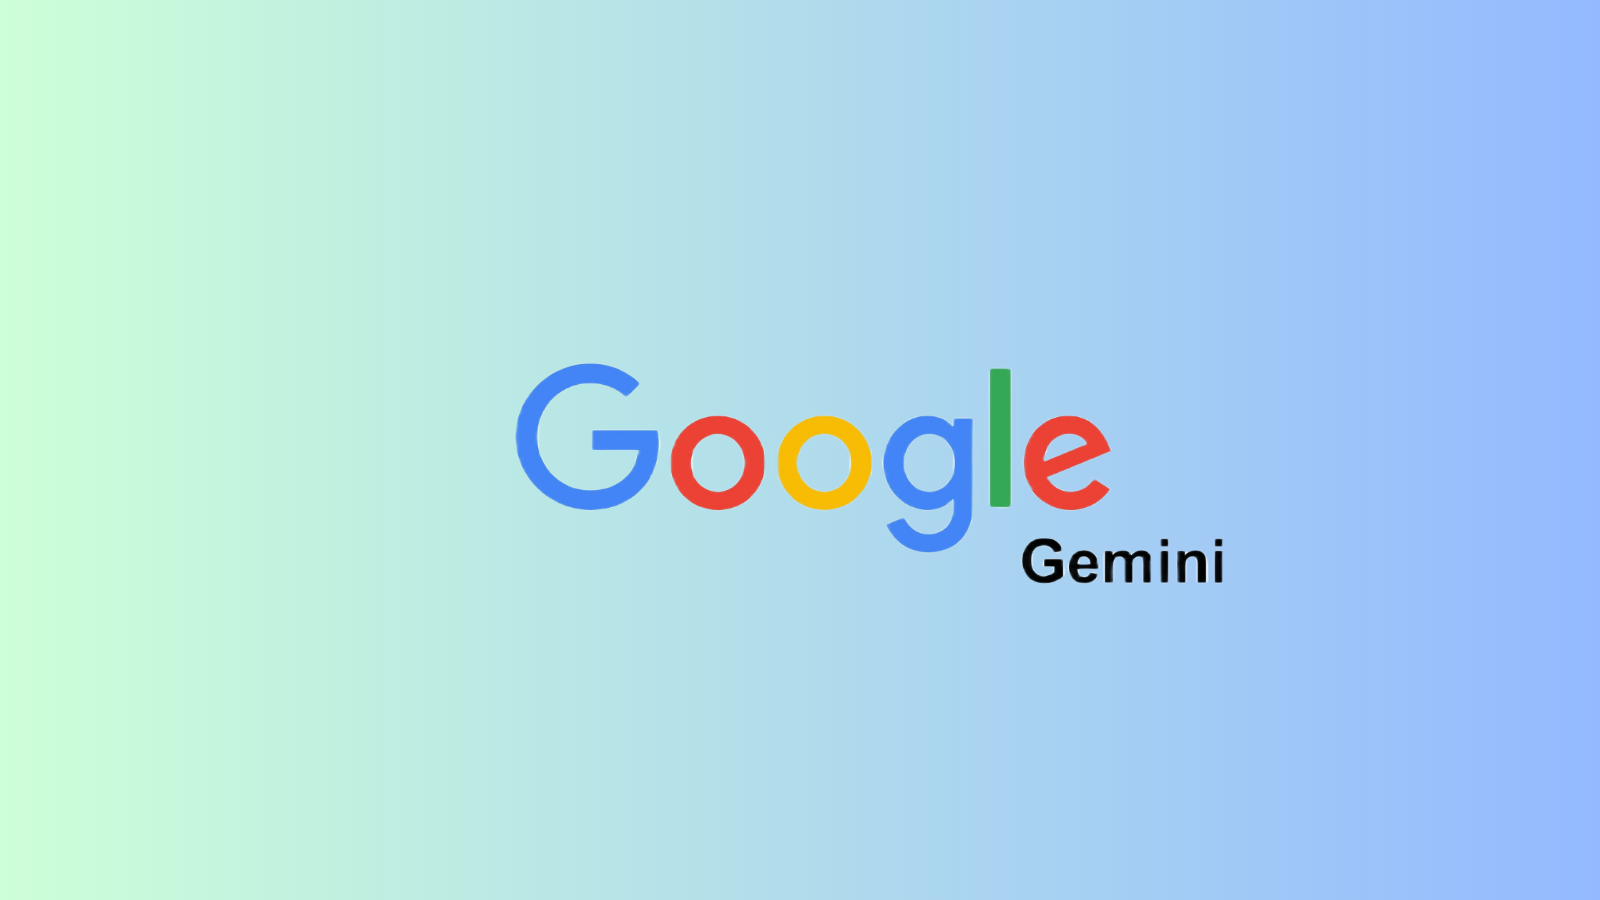 Google, Sohbet Botu Gemini’ yi Erteledi